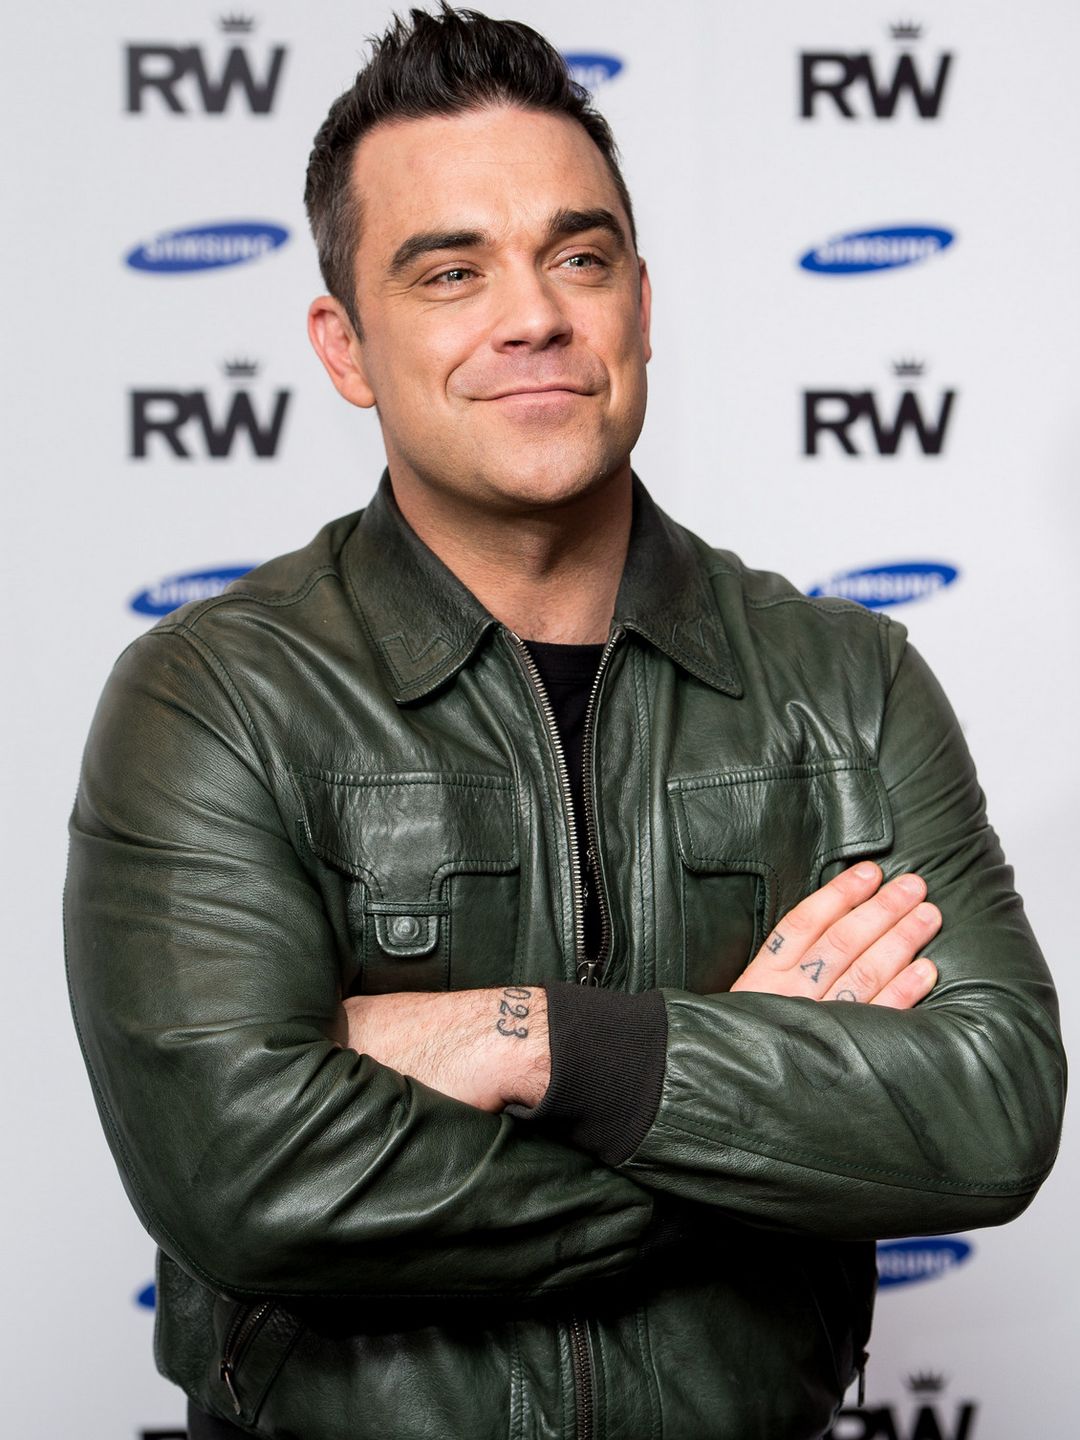 Robbie Williams family